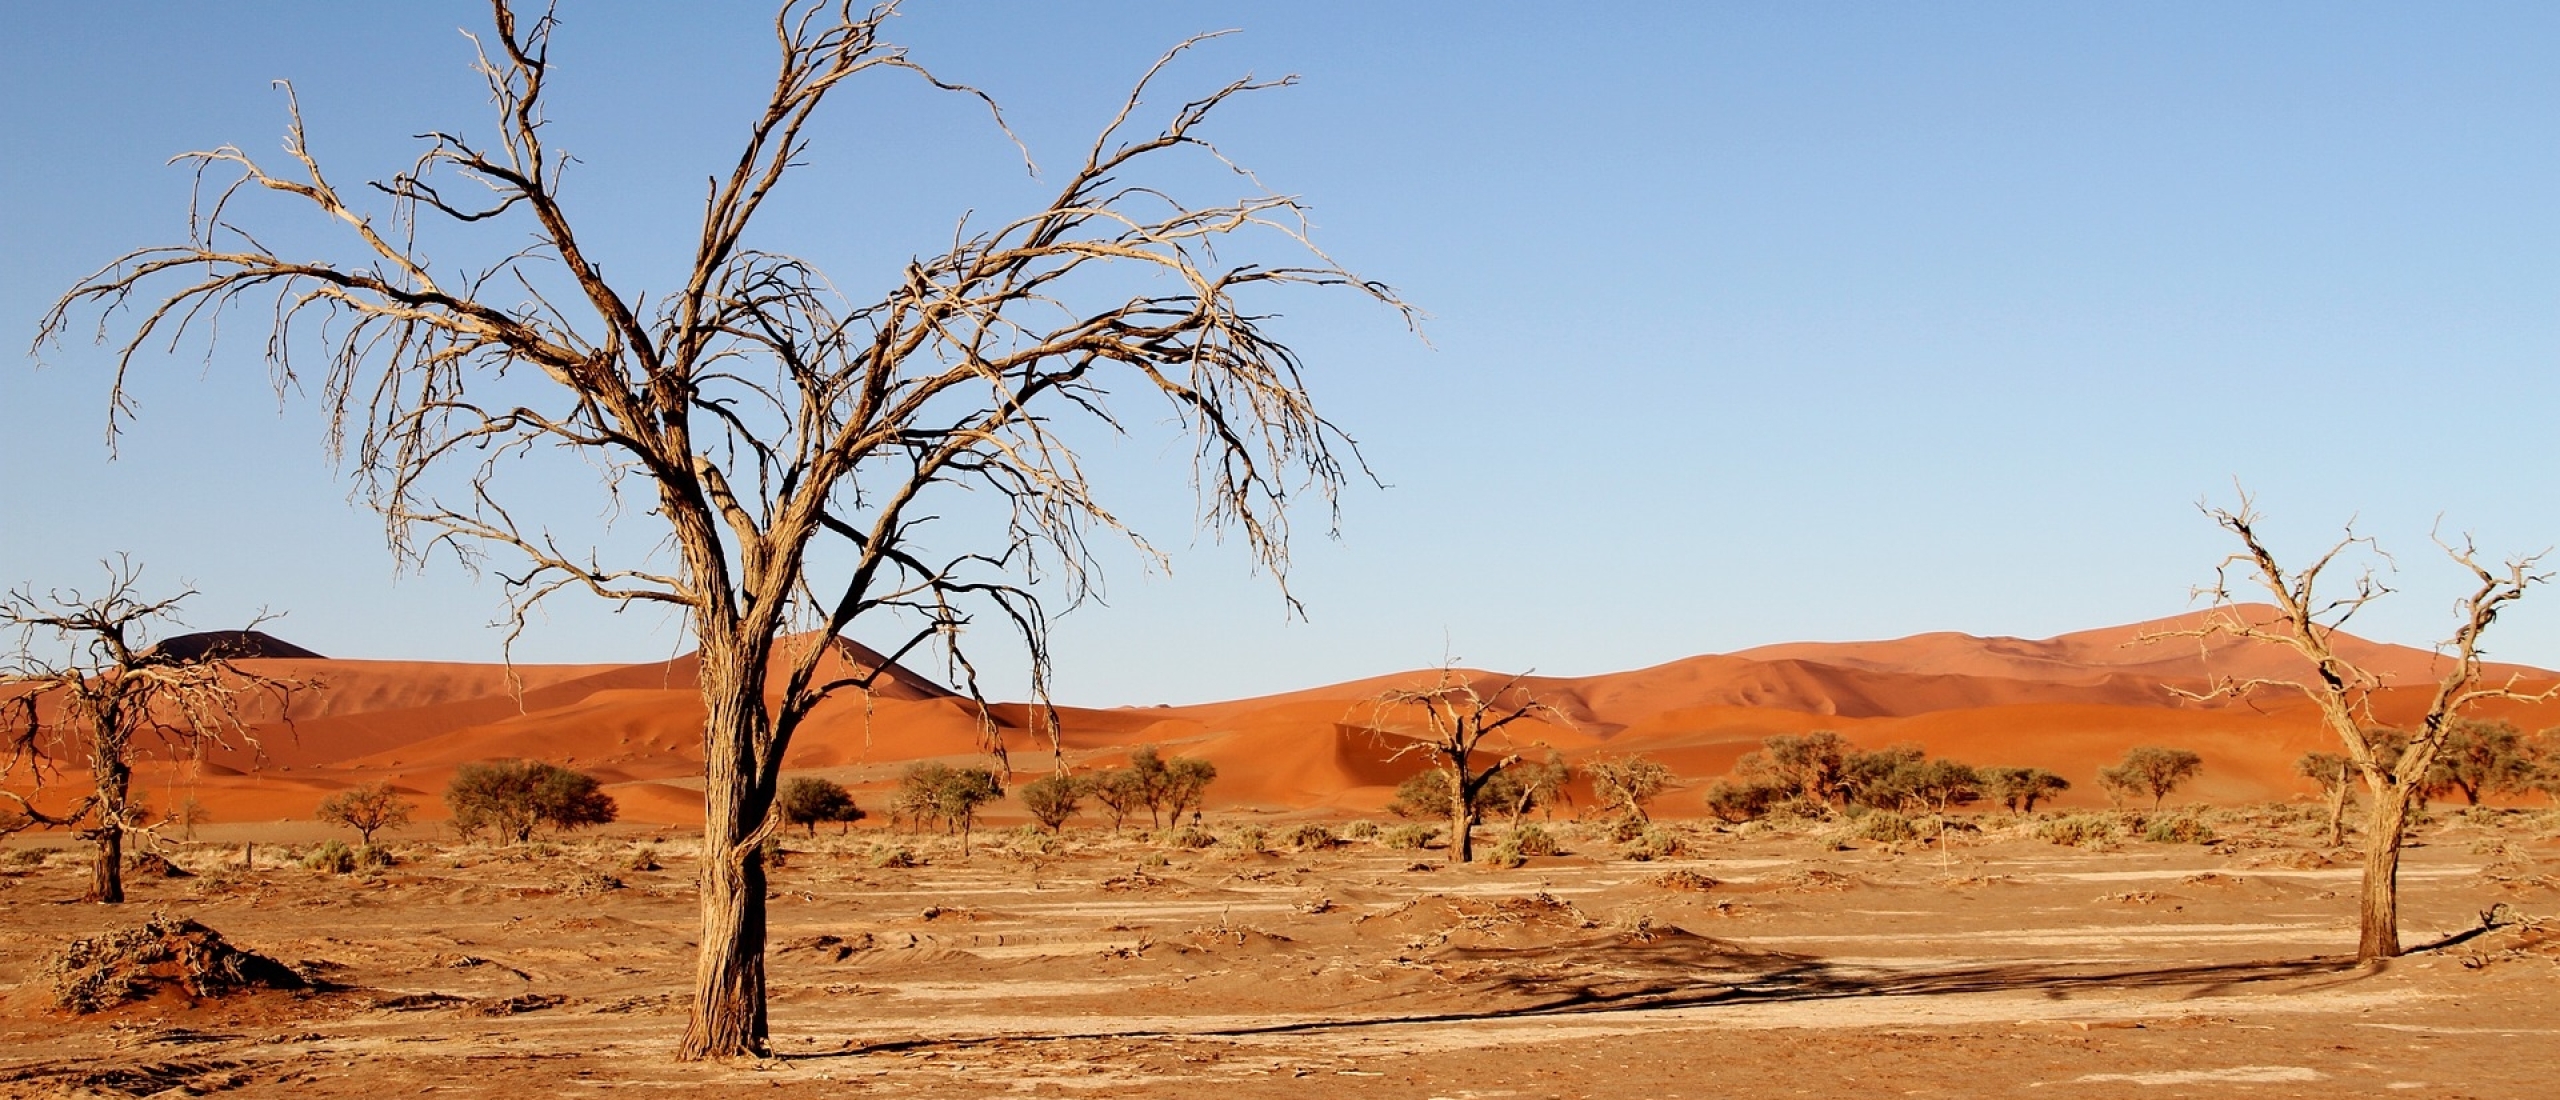 Kalahariwoestijn in Afrika